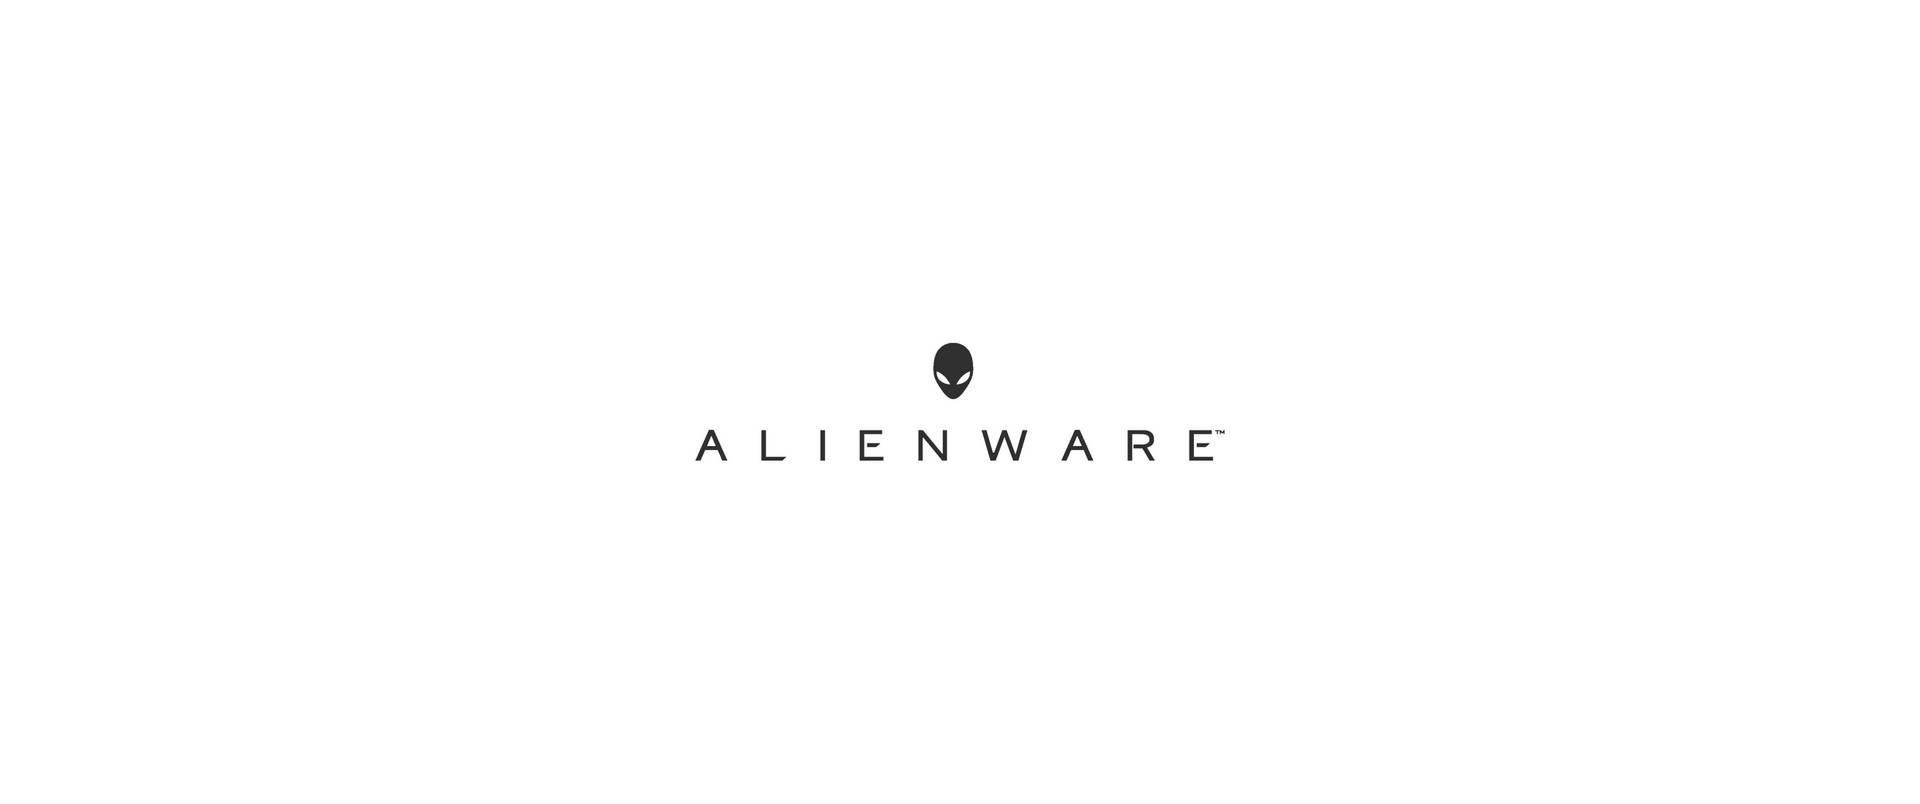 Simple White Alienware Logo Background